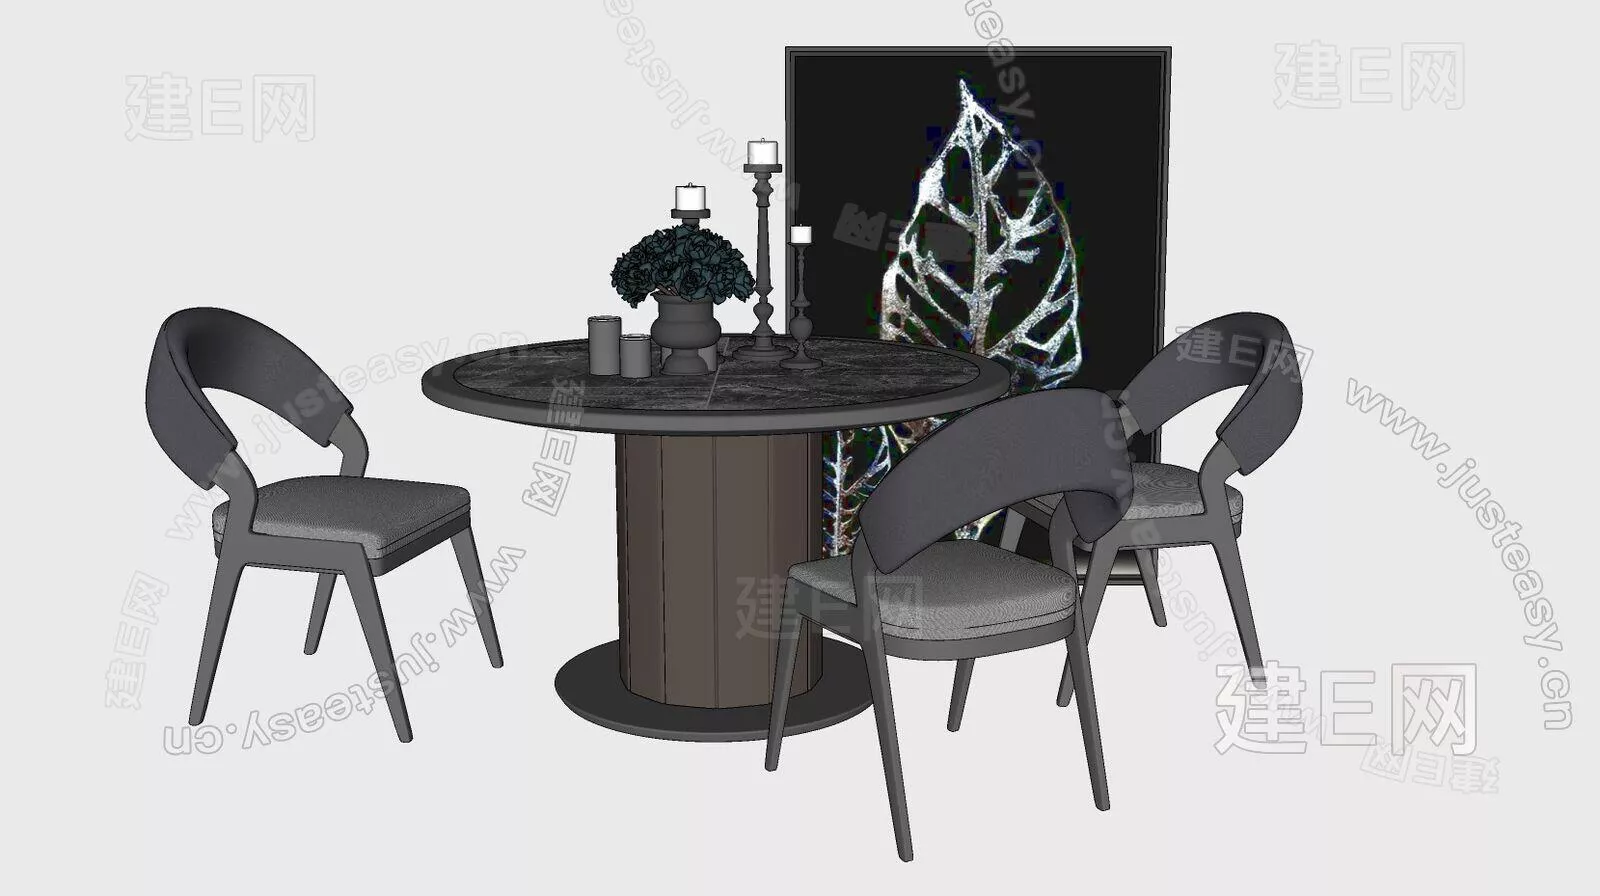 NORDIC DINING TABLE SET - SKETCHUP 3D MODEL - ENSCAPE - 107233373